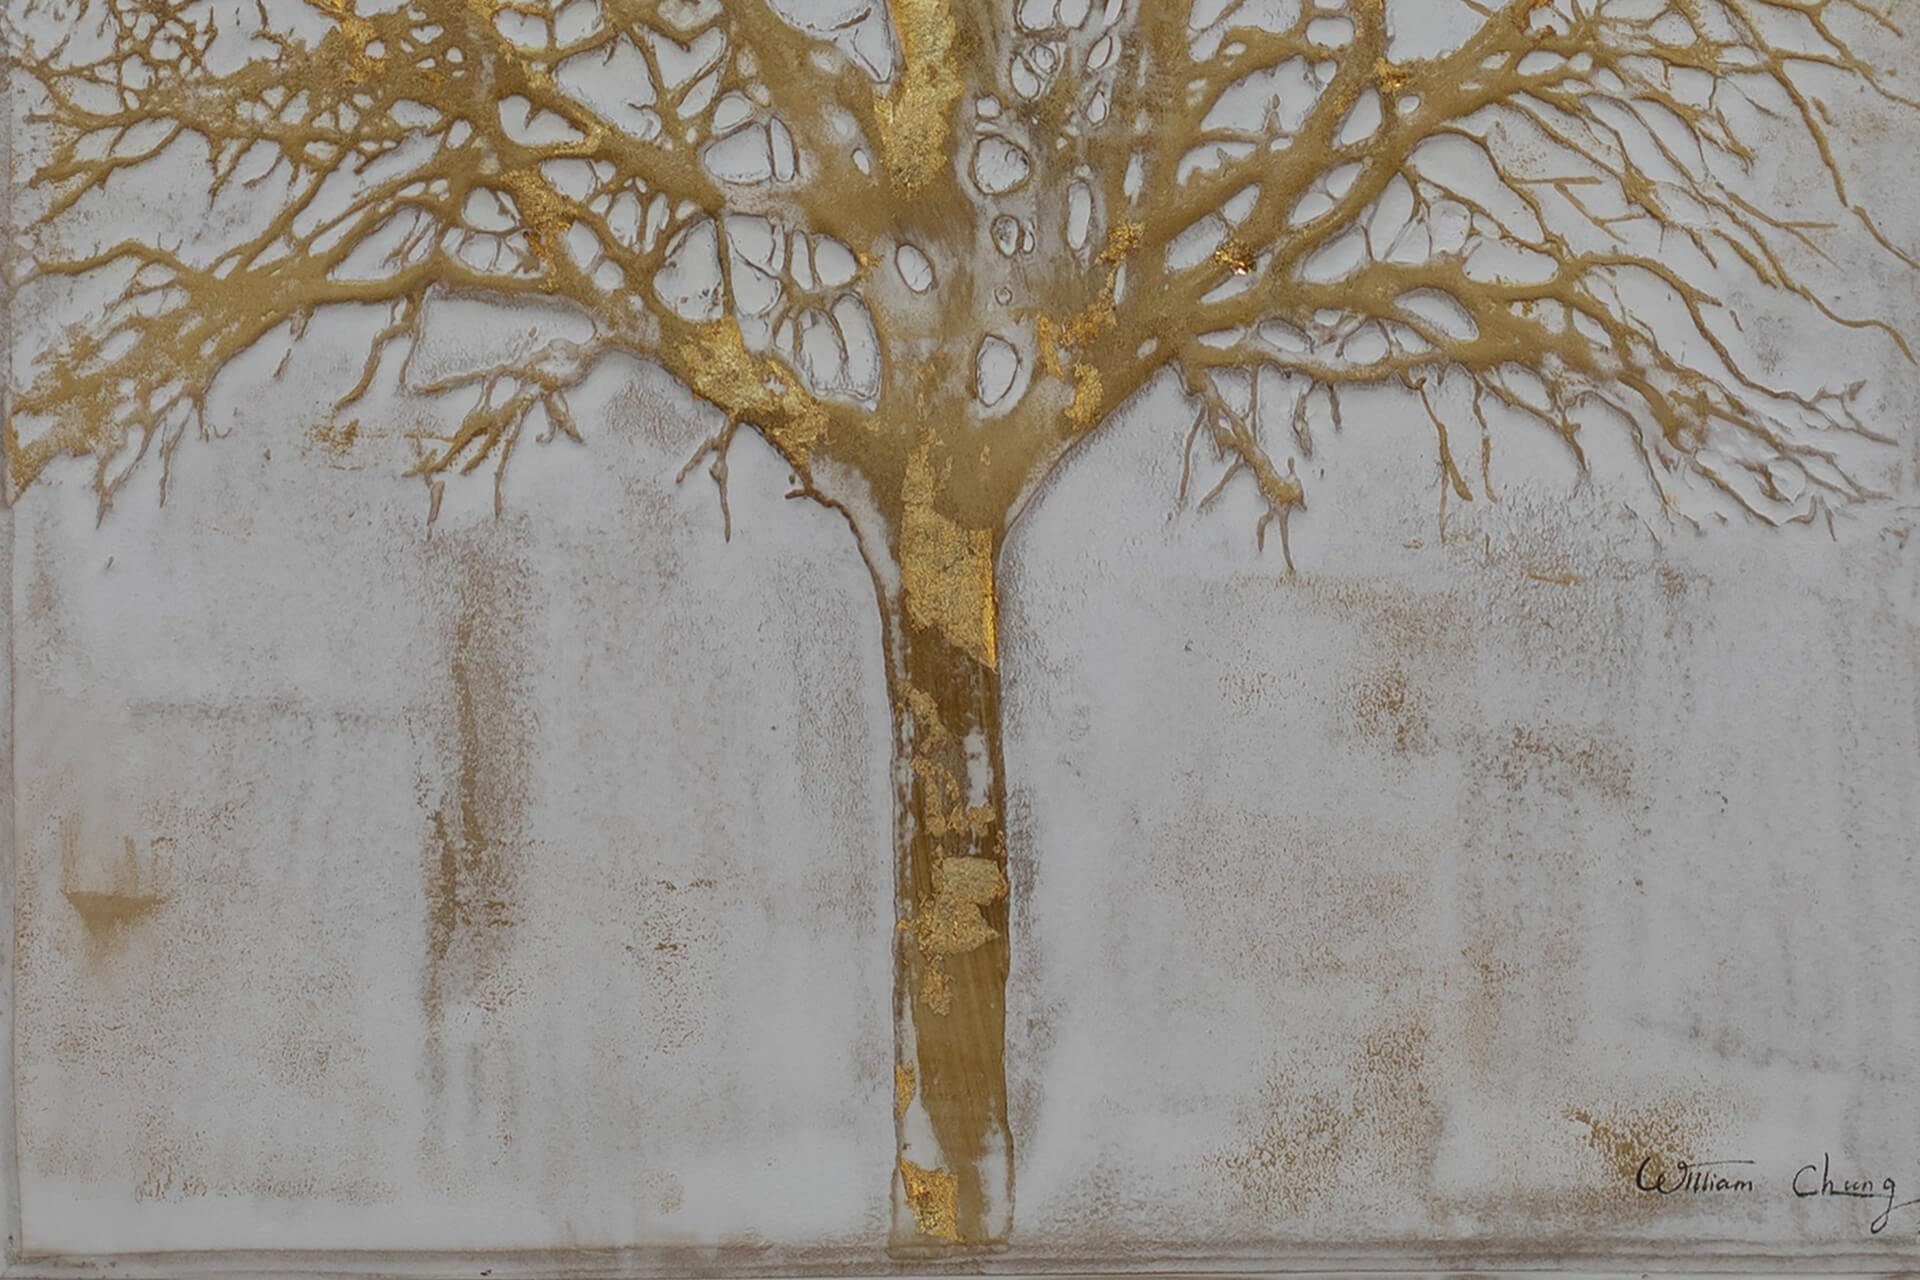 Life Tree KUNSTLOFT Gemälde of 100% Wandbild 60x120 cm, Leinwandbild HANDGEMALT Wohnzimmer